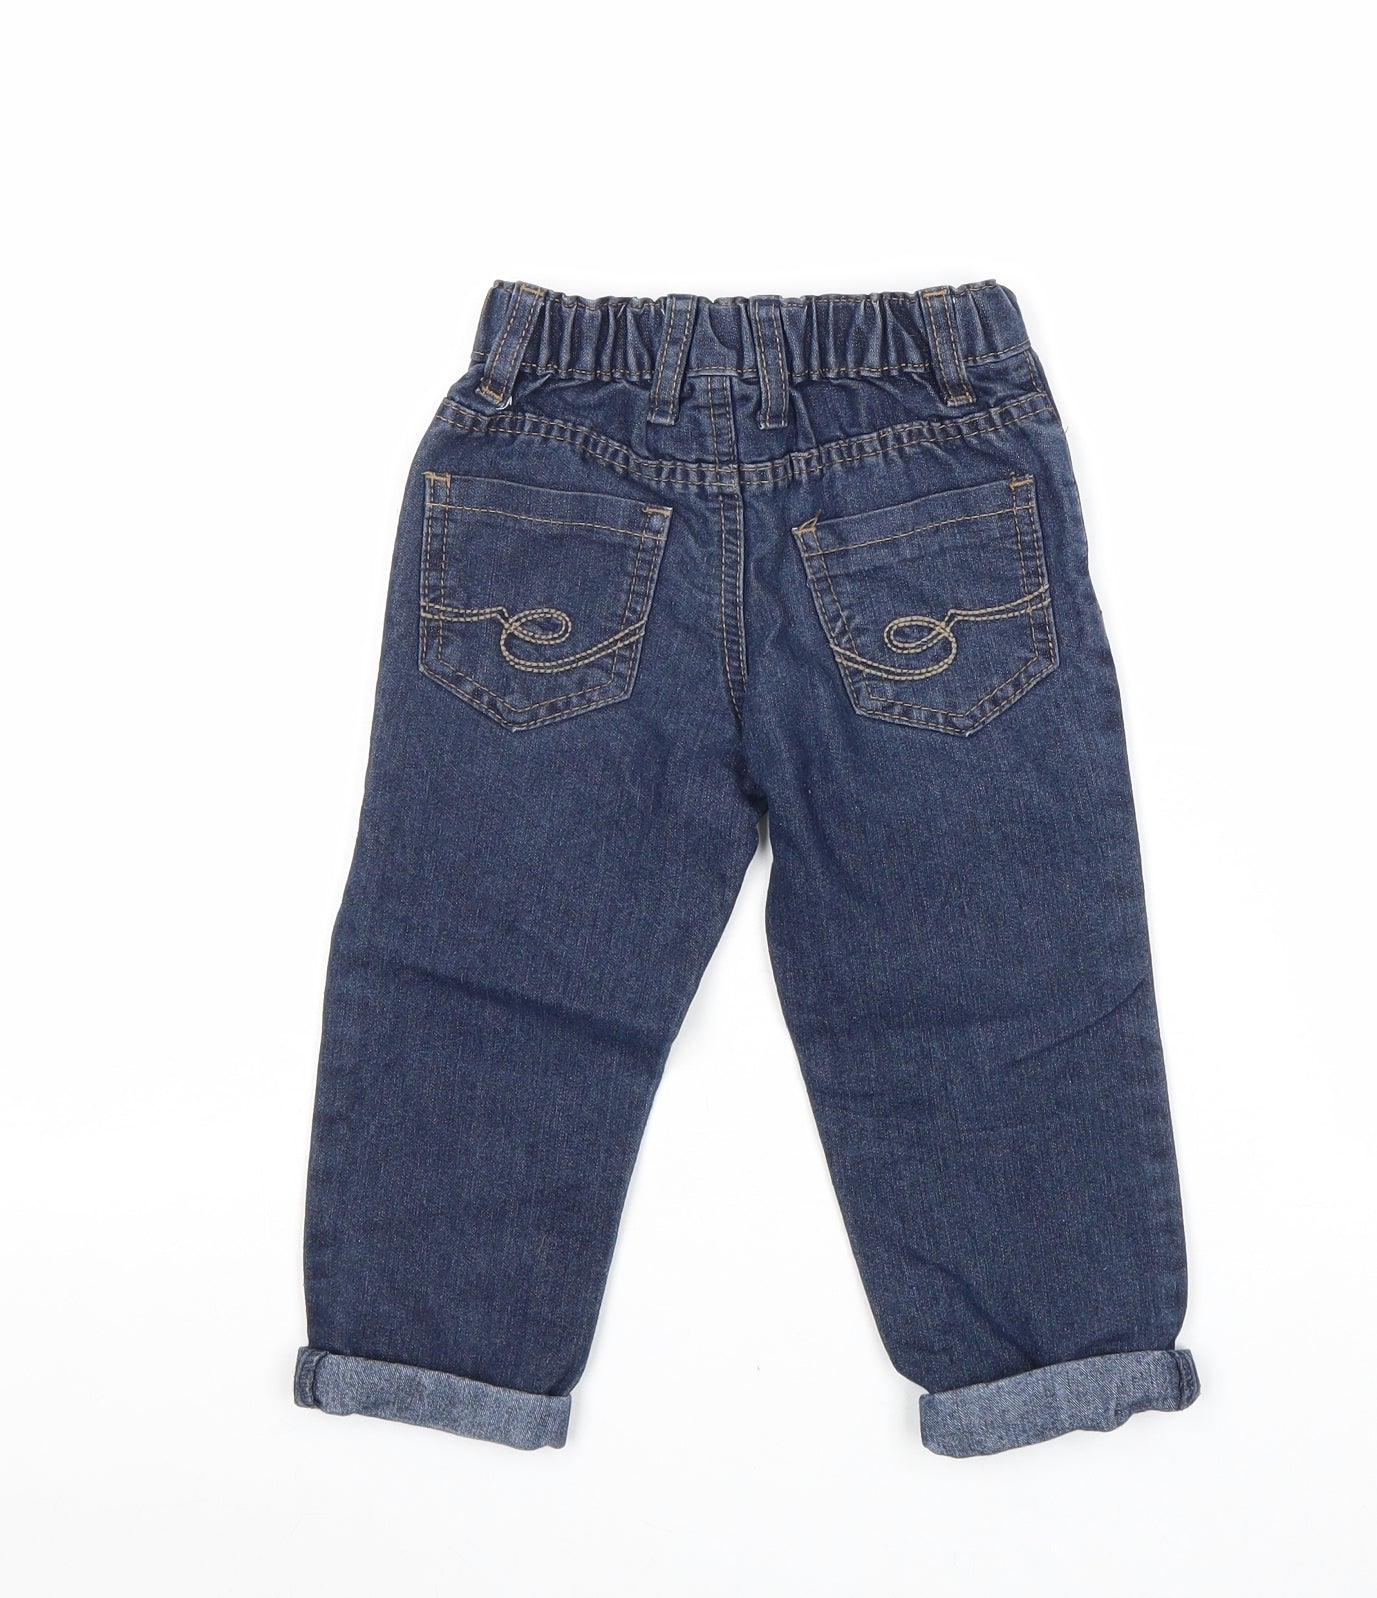 Waga Dude Boys Blue Cotton Straight Jeans Size 2-3 Years Regular Zip